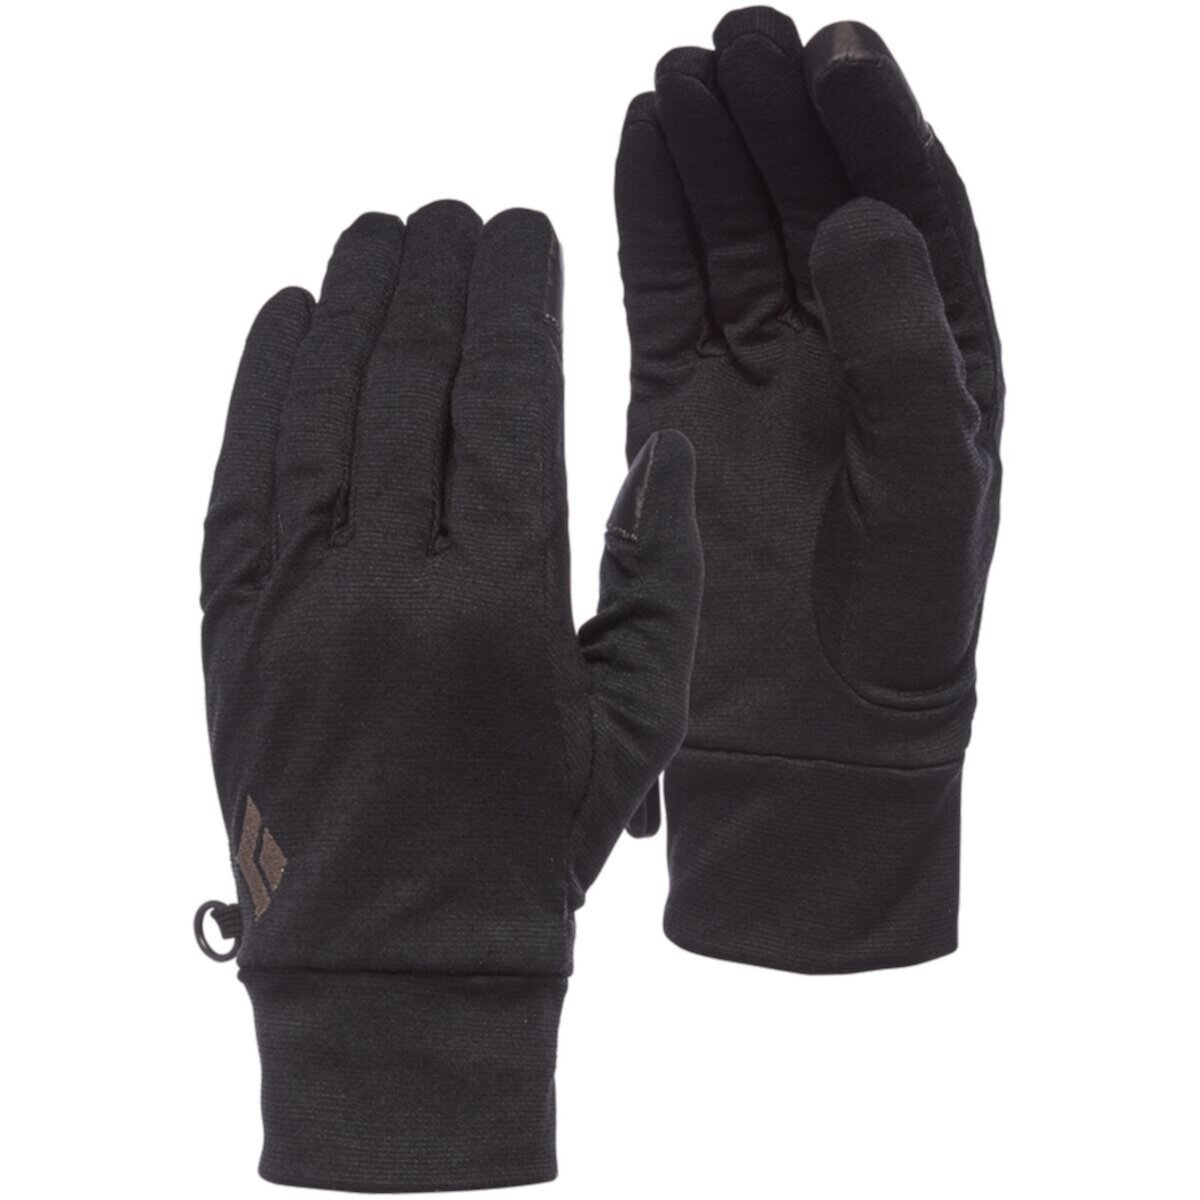 Black Diamond перчатки треккинговые. Перчатки Black Diamond. ￼ перчатки Nash ZT Gloves. Перчатки антрацит ВК 10004.